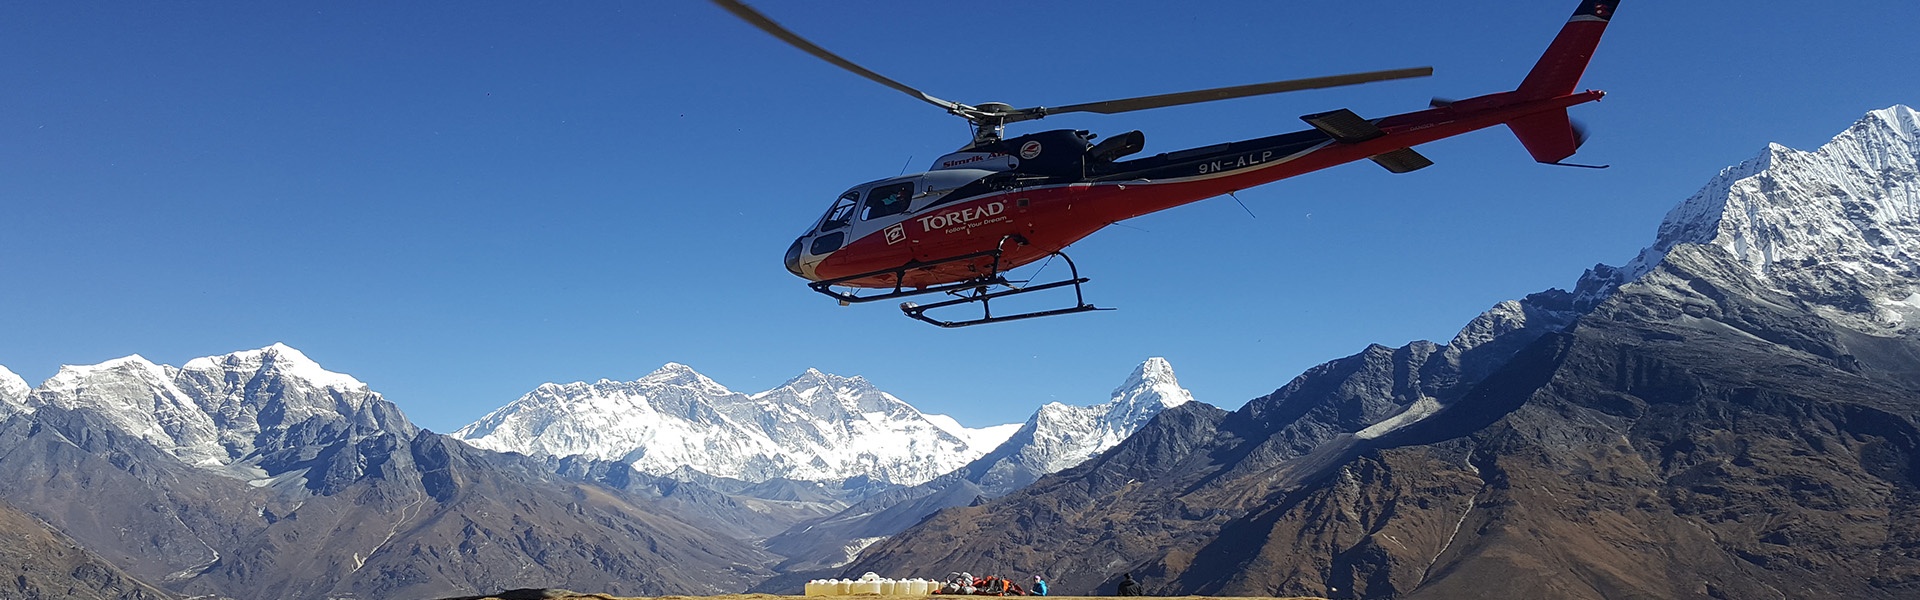 Everest Base Camp Trek and Heli back to Lukla Banner